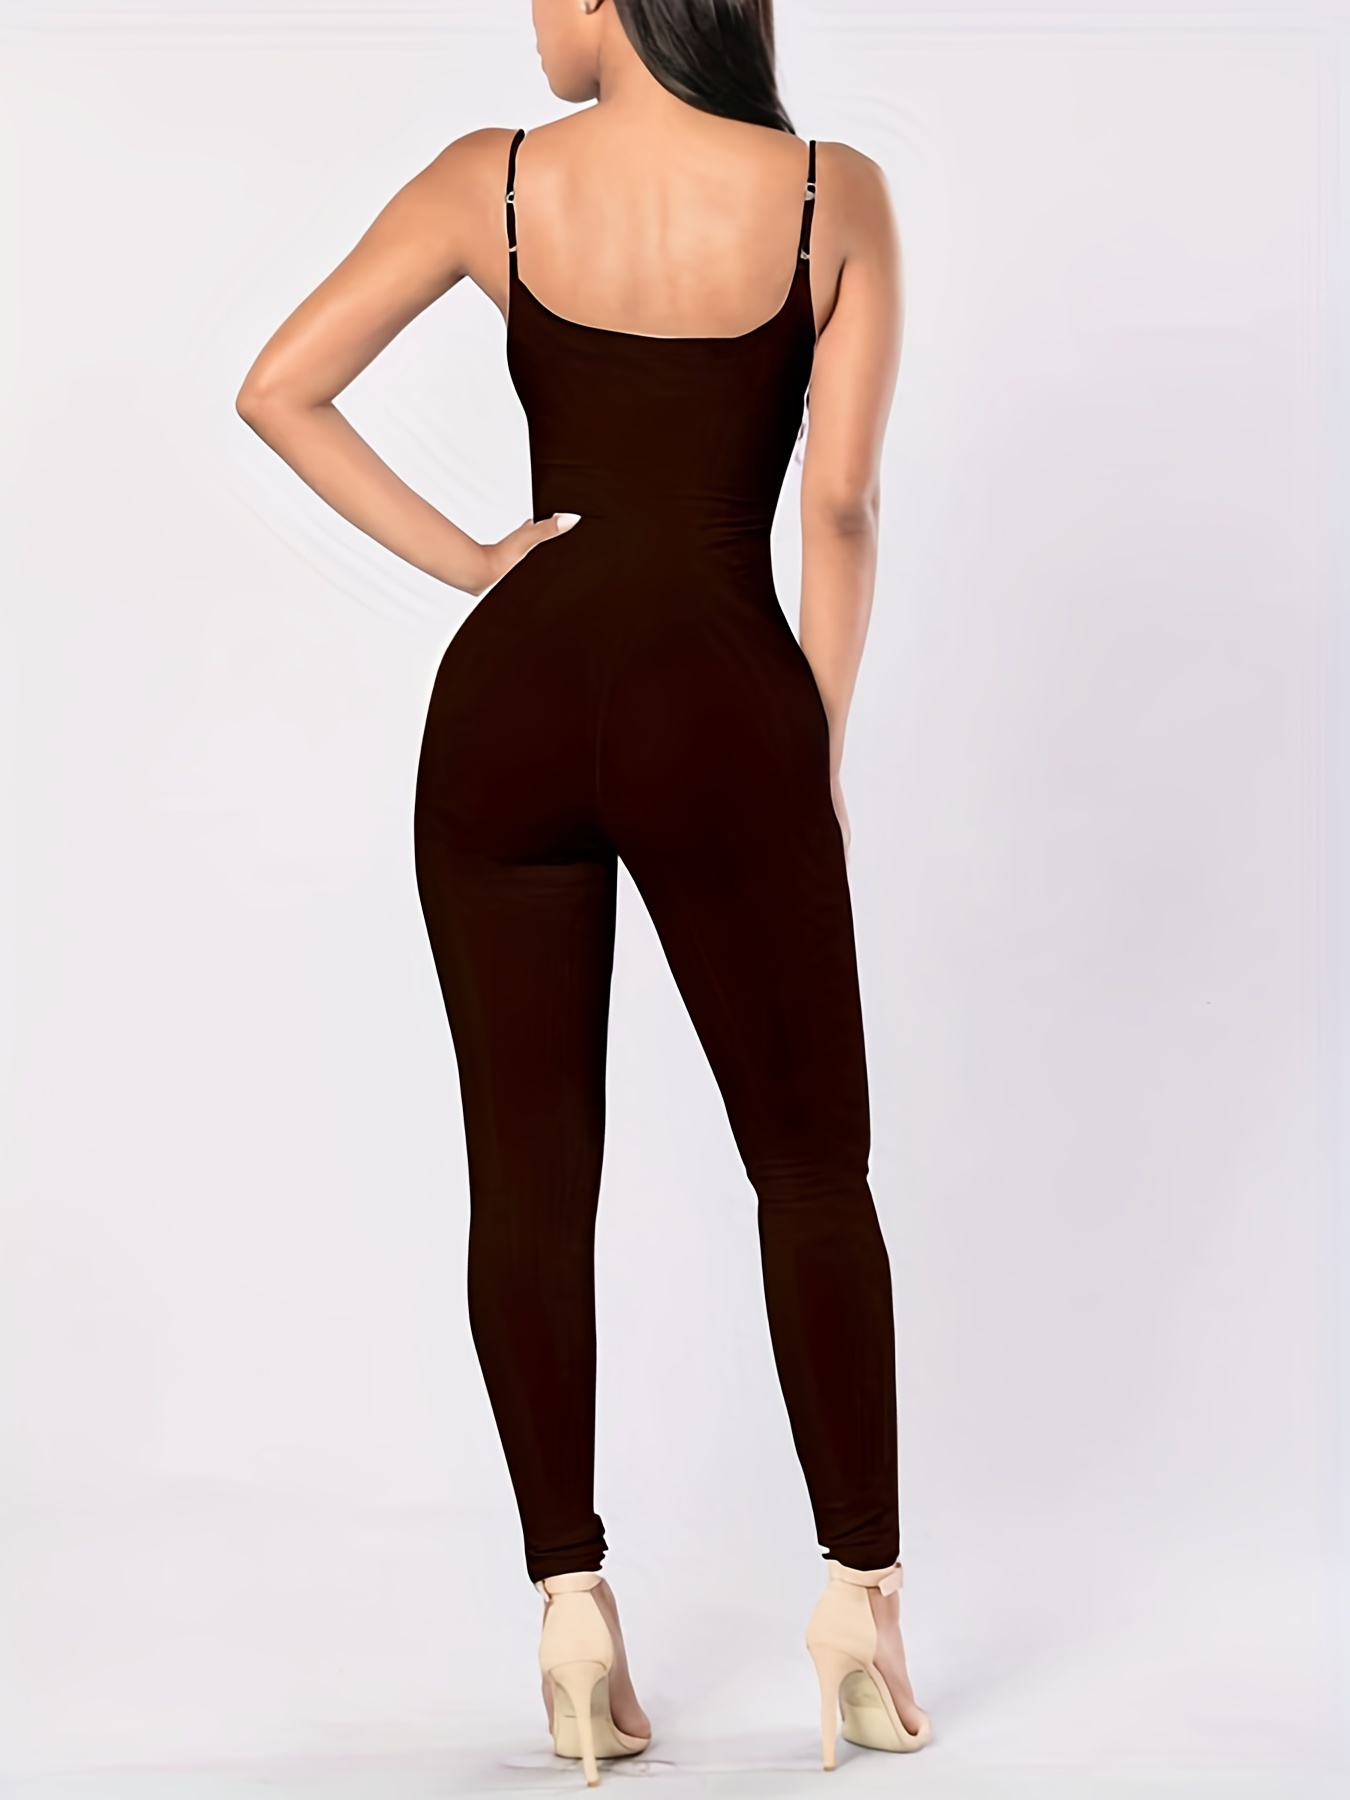 2019 Sexy Women Sleeveless Romper Jumpsuit Bodycon Bodysuit Slim